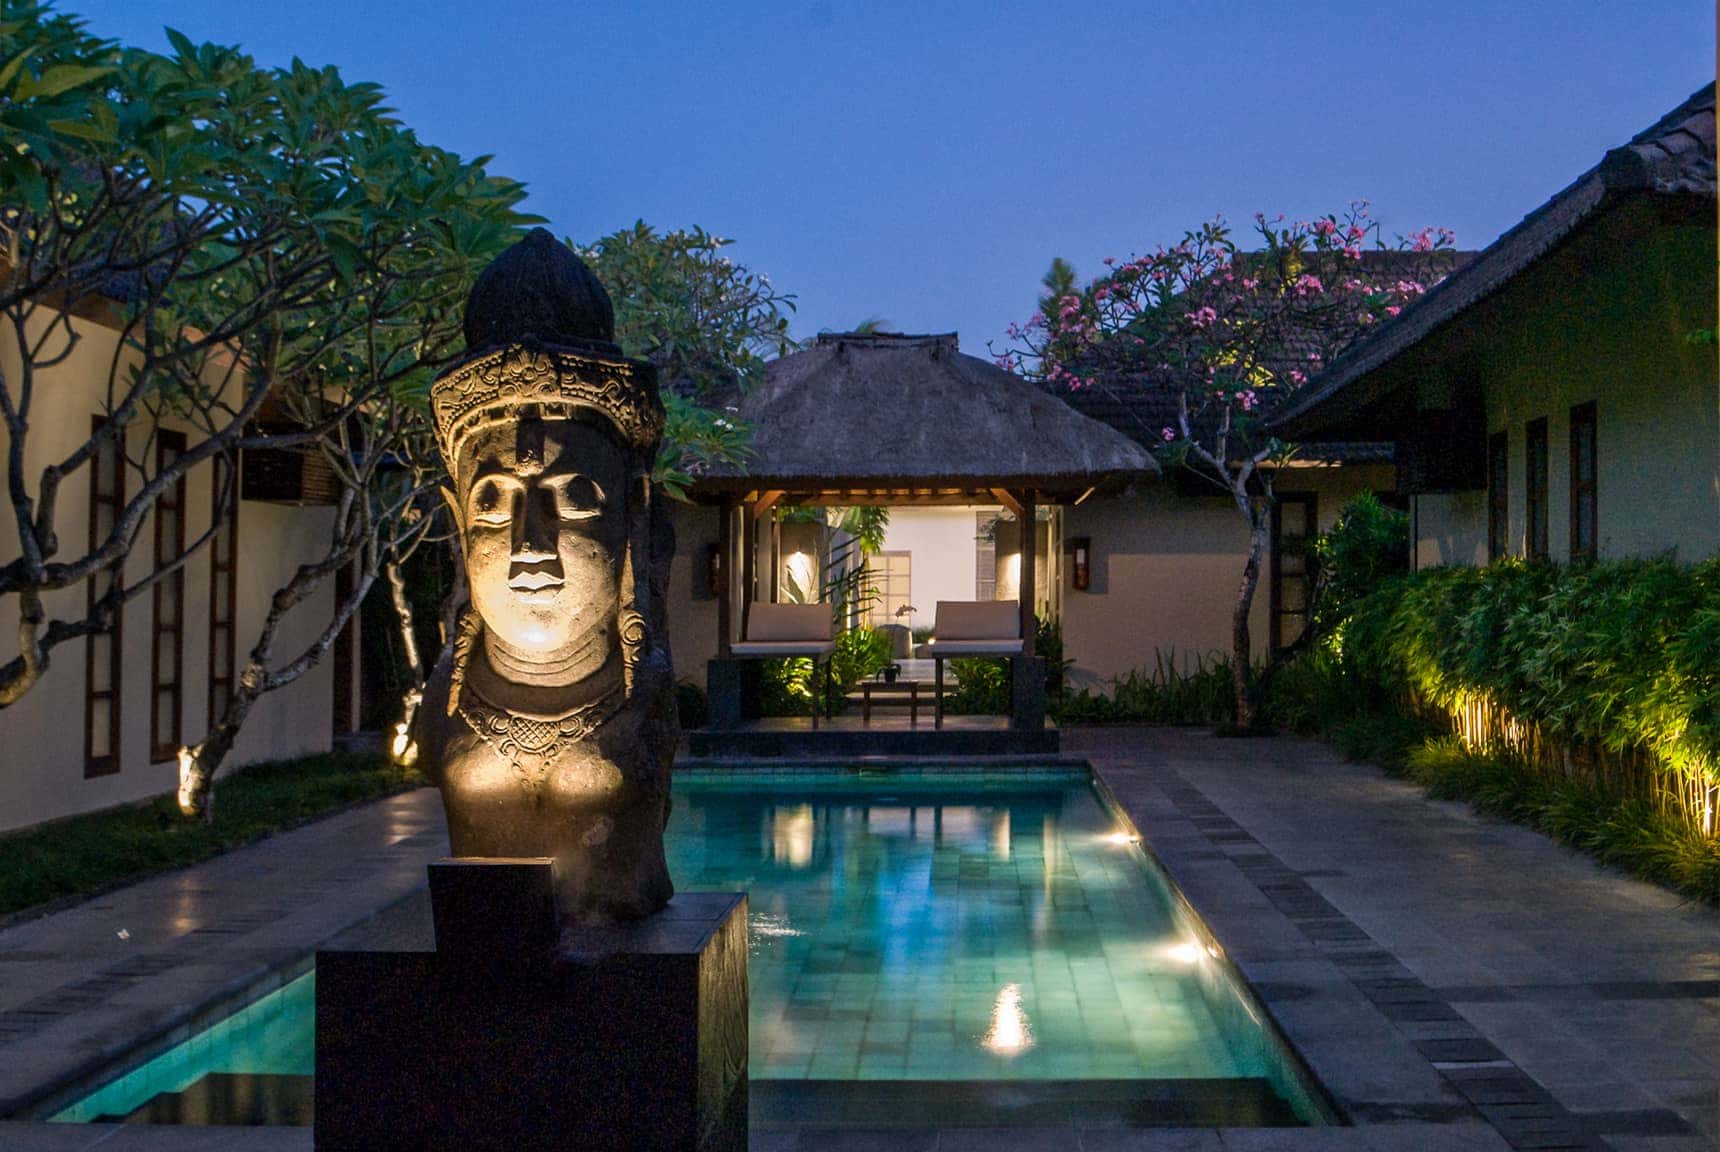 Uma Sapna Villas - Seminyak, Bali Indonesia (Bali villa photography by master photographer Rick Carmichael of LuxViz)